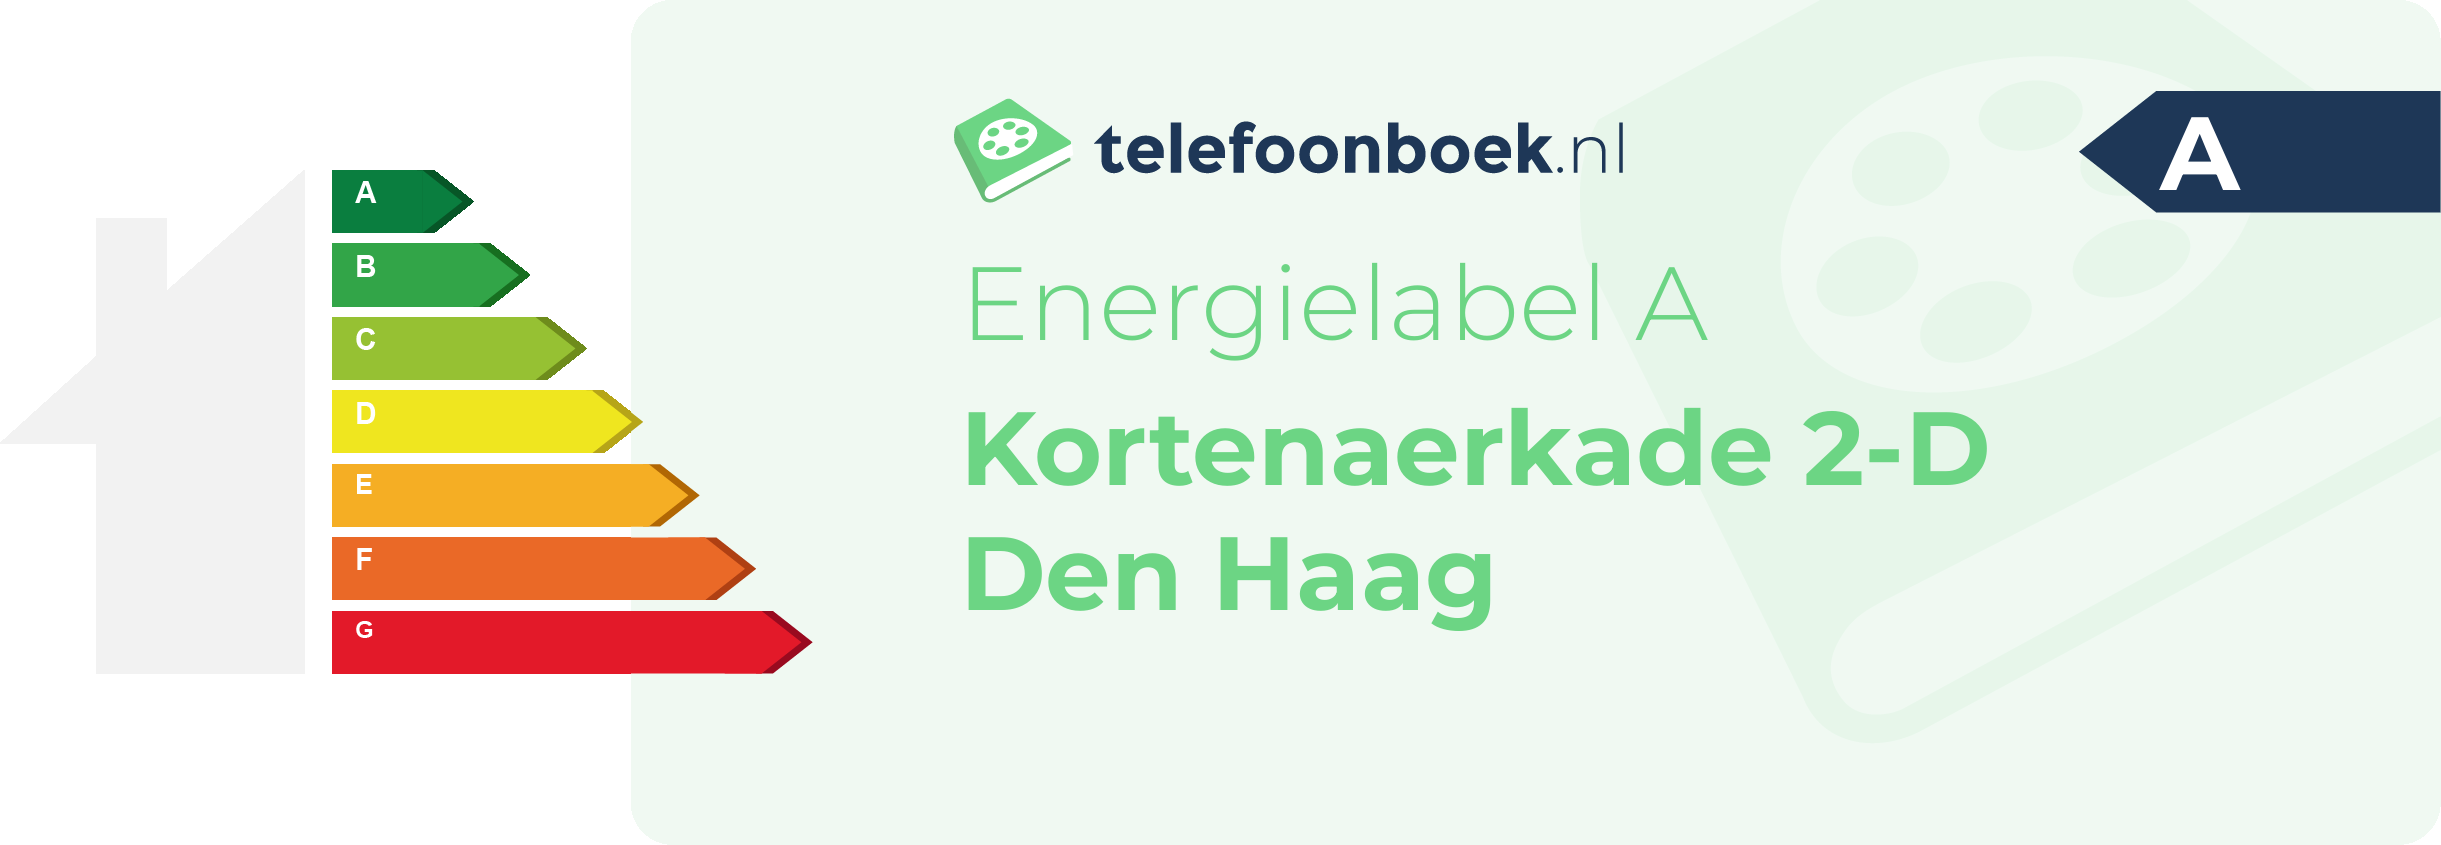 Energielabel Kortenaerkade 2-D Den Haag